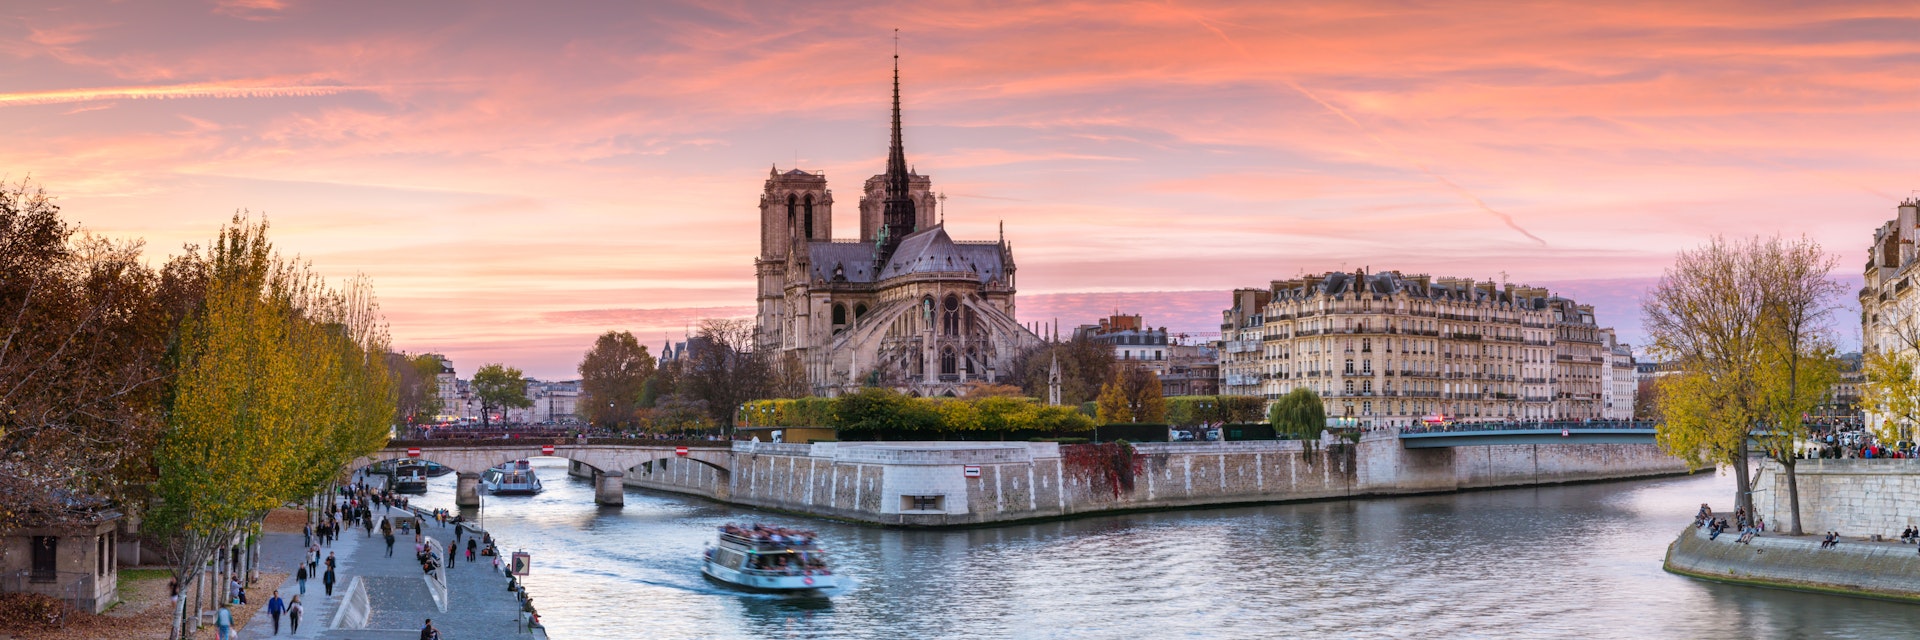 Panoramic of Notre Dame at sunset, Paris